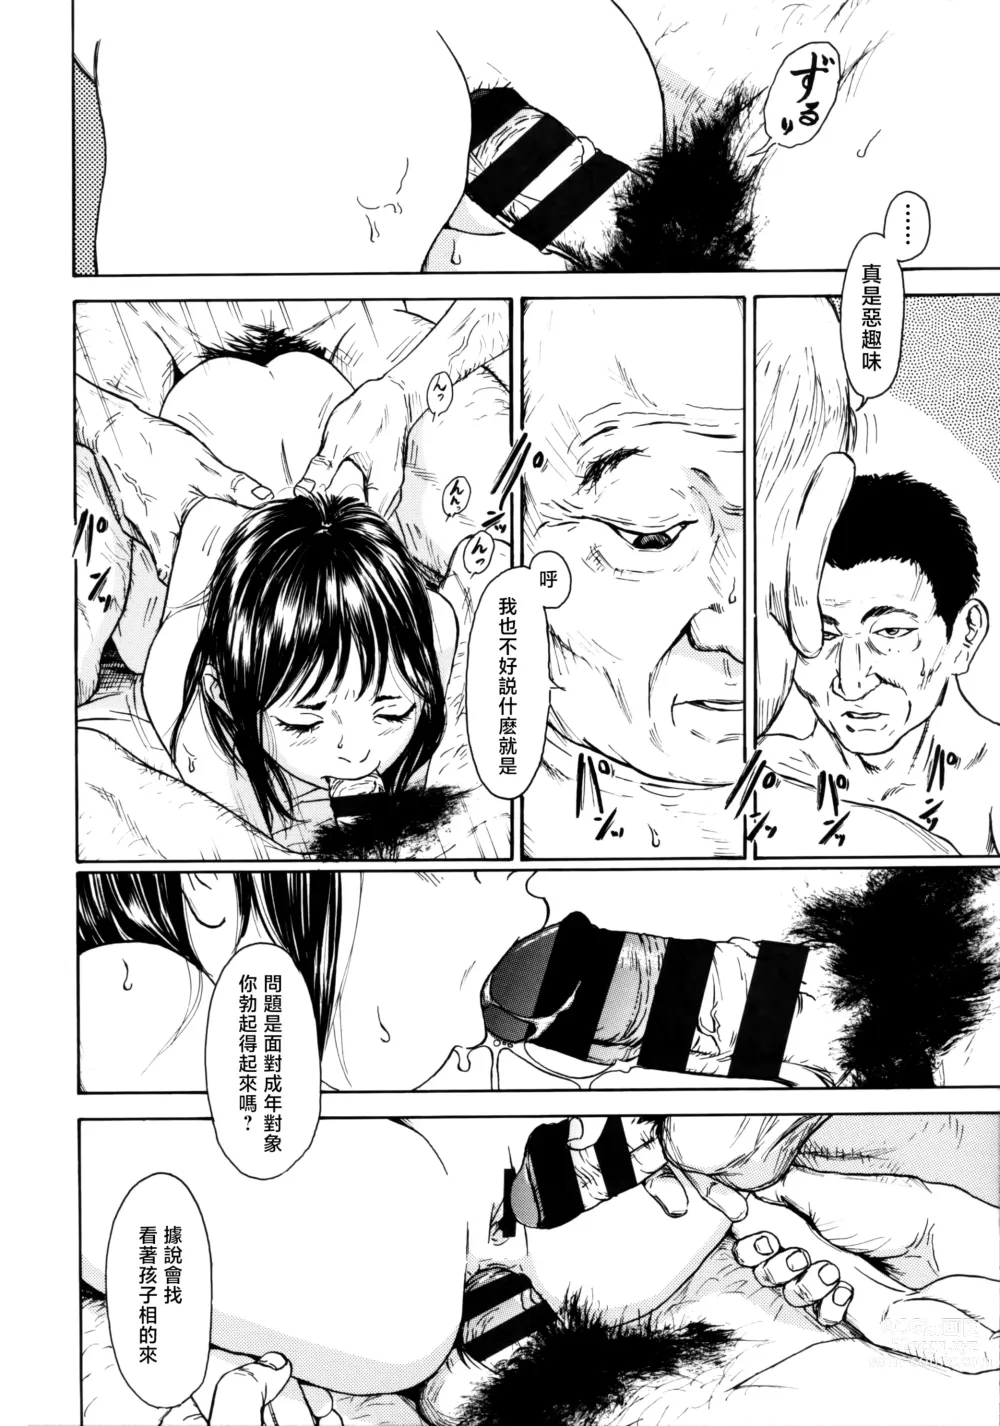 Page 23 of manga Psycho Psycho Douga